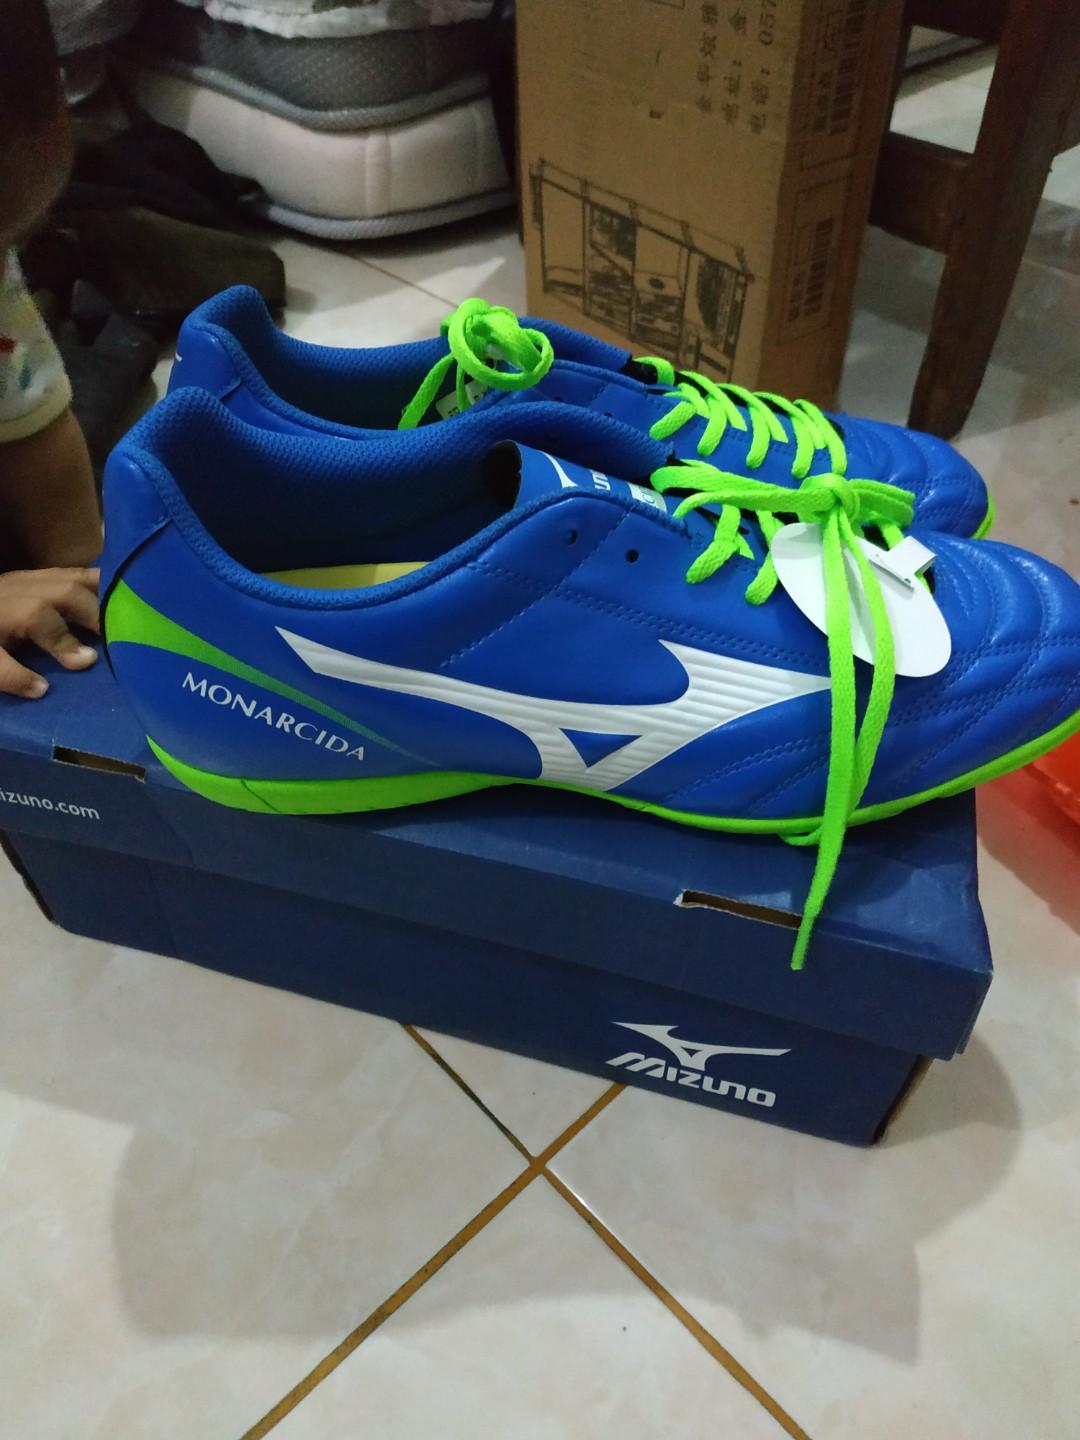 Sepatu Futsal mizuno monarcida original 